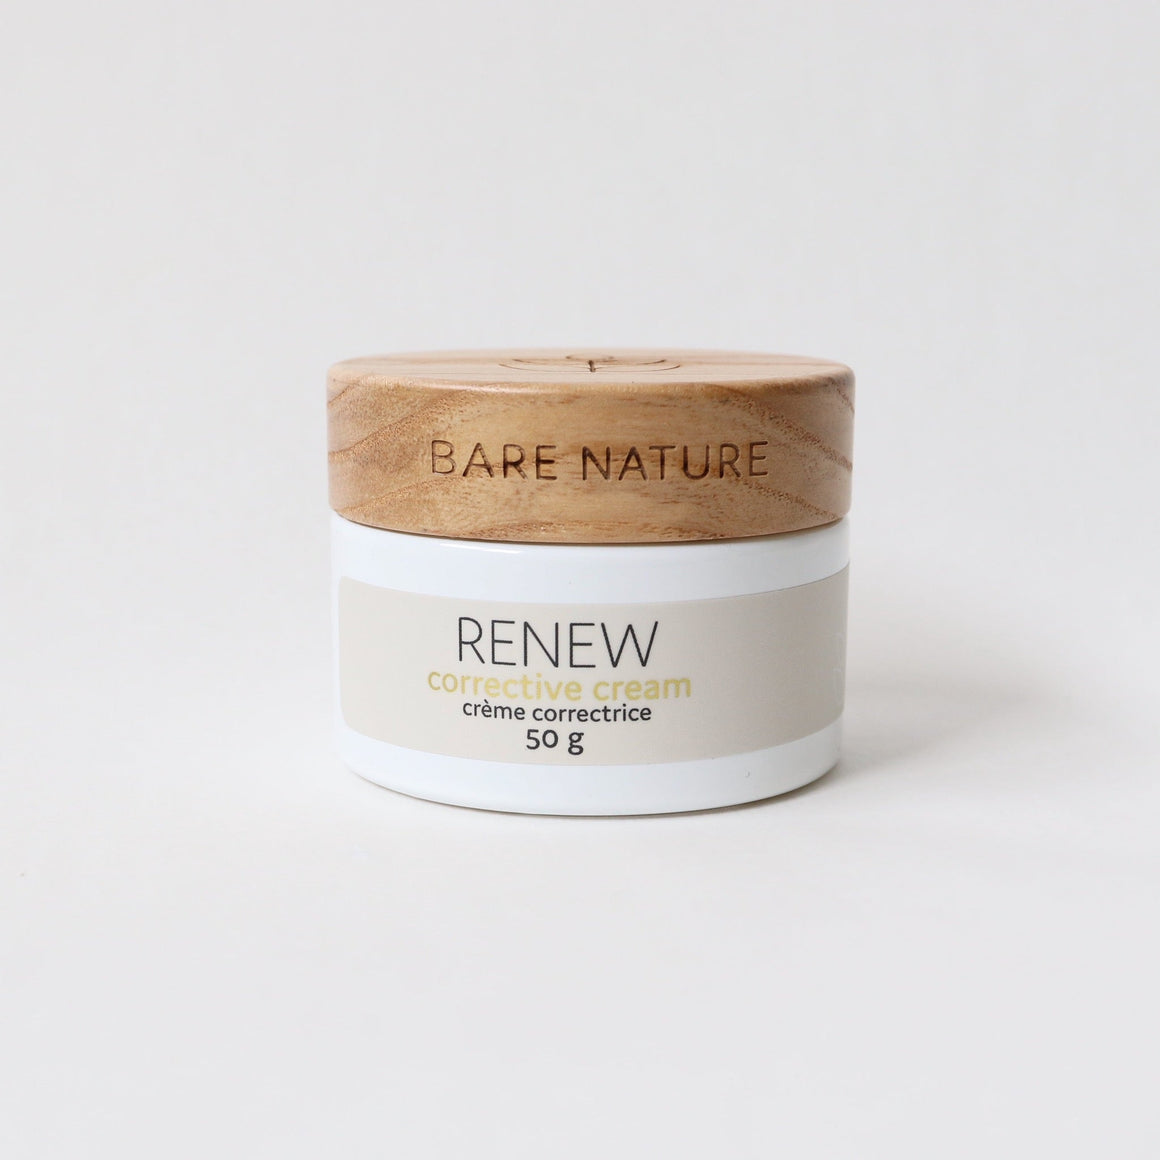 RENEW Corrective Cream - barenature.ca